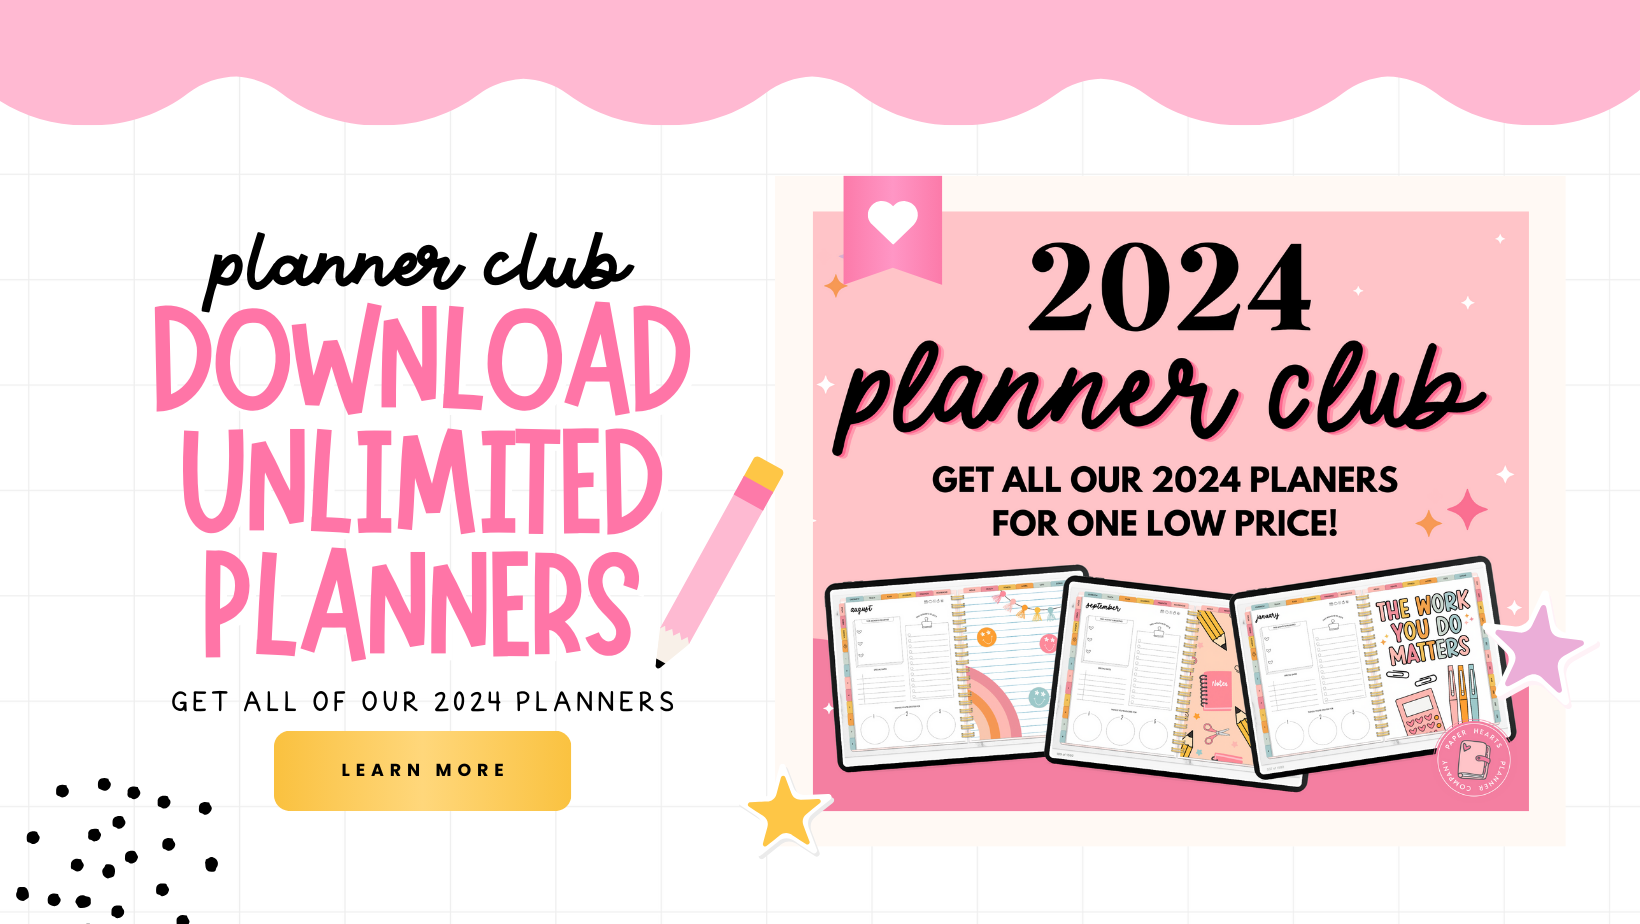 Winter Digital Stickers – Paper Hearts Planner Co.